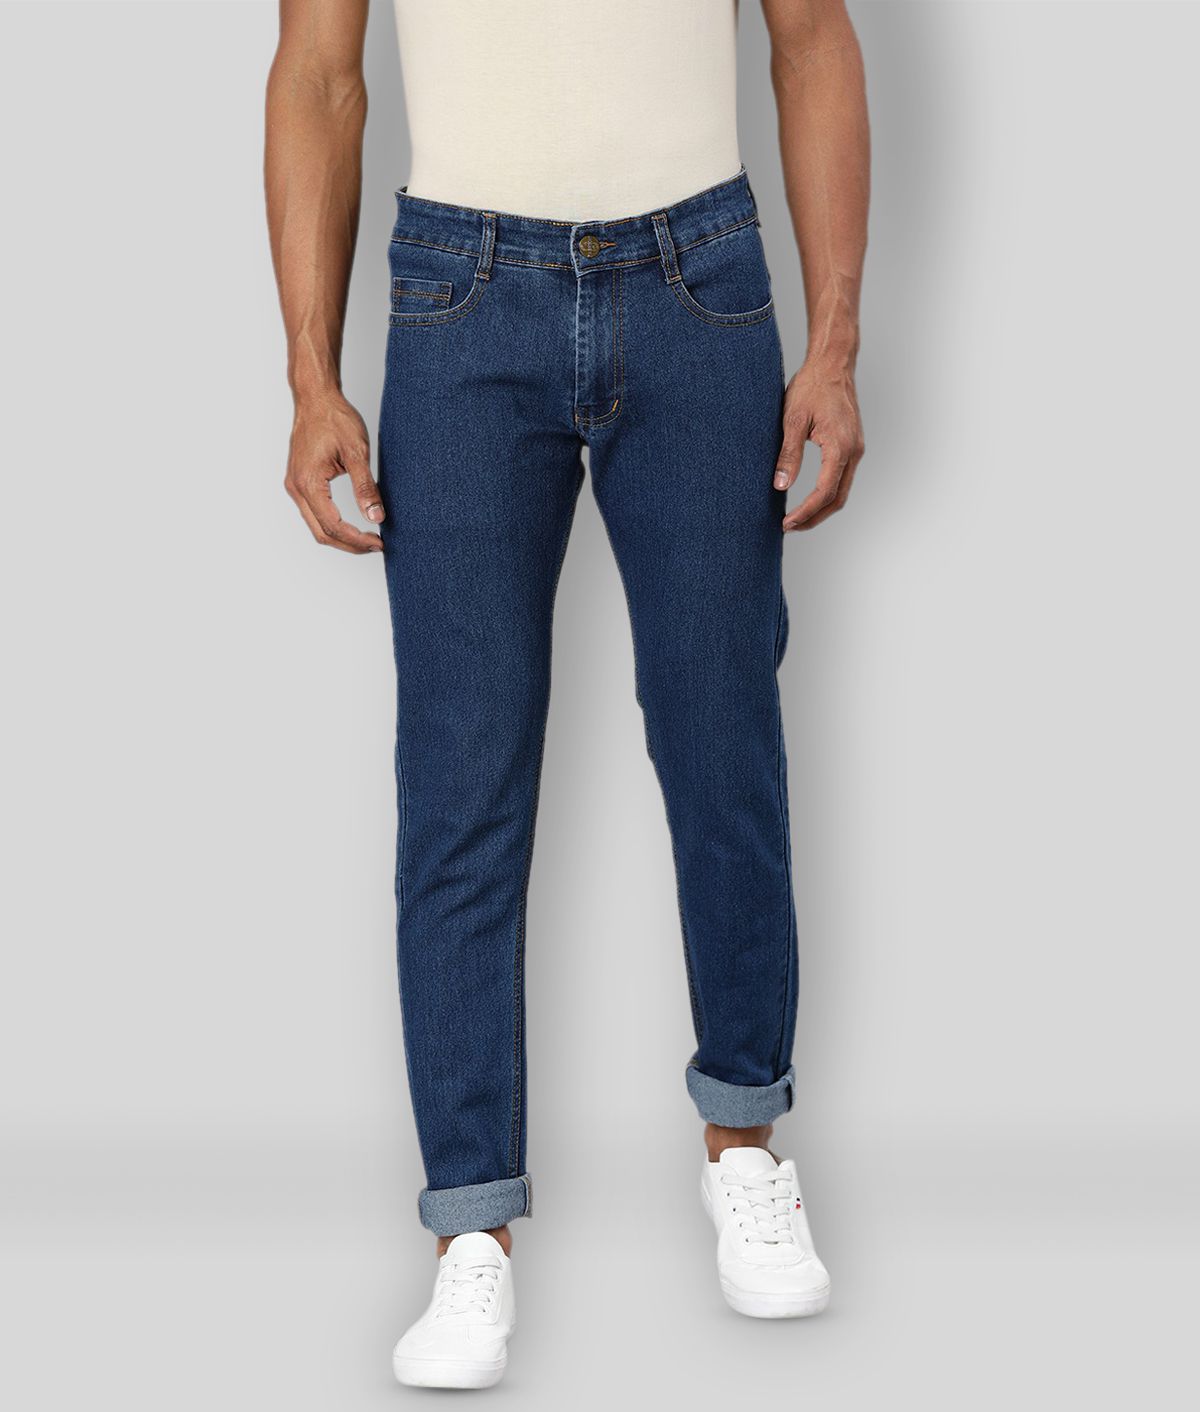 Urbano Fashion - Blue 100% Cotton Slim Fit Men's Jeans ( Pack of 1 )